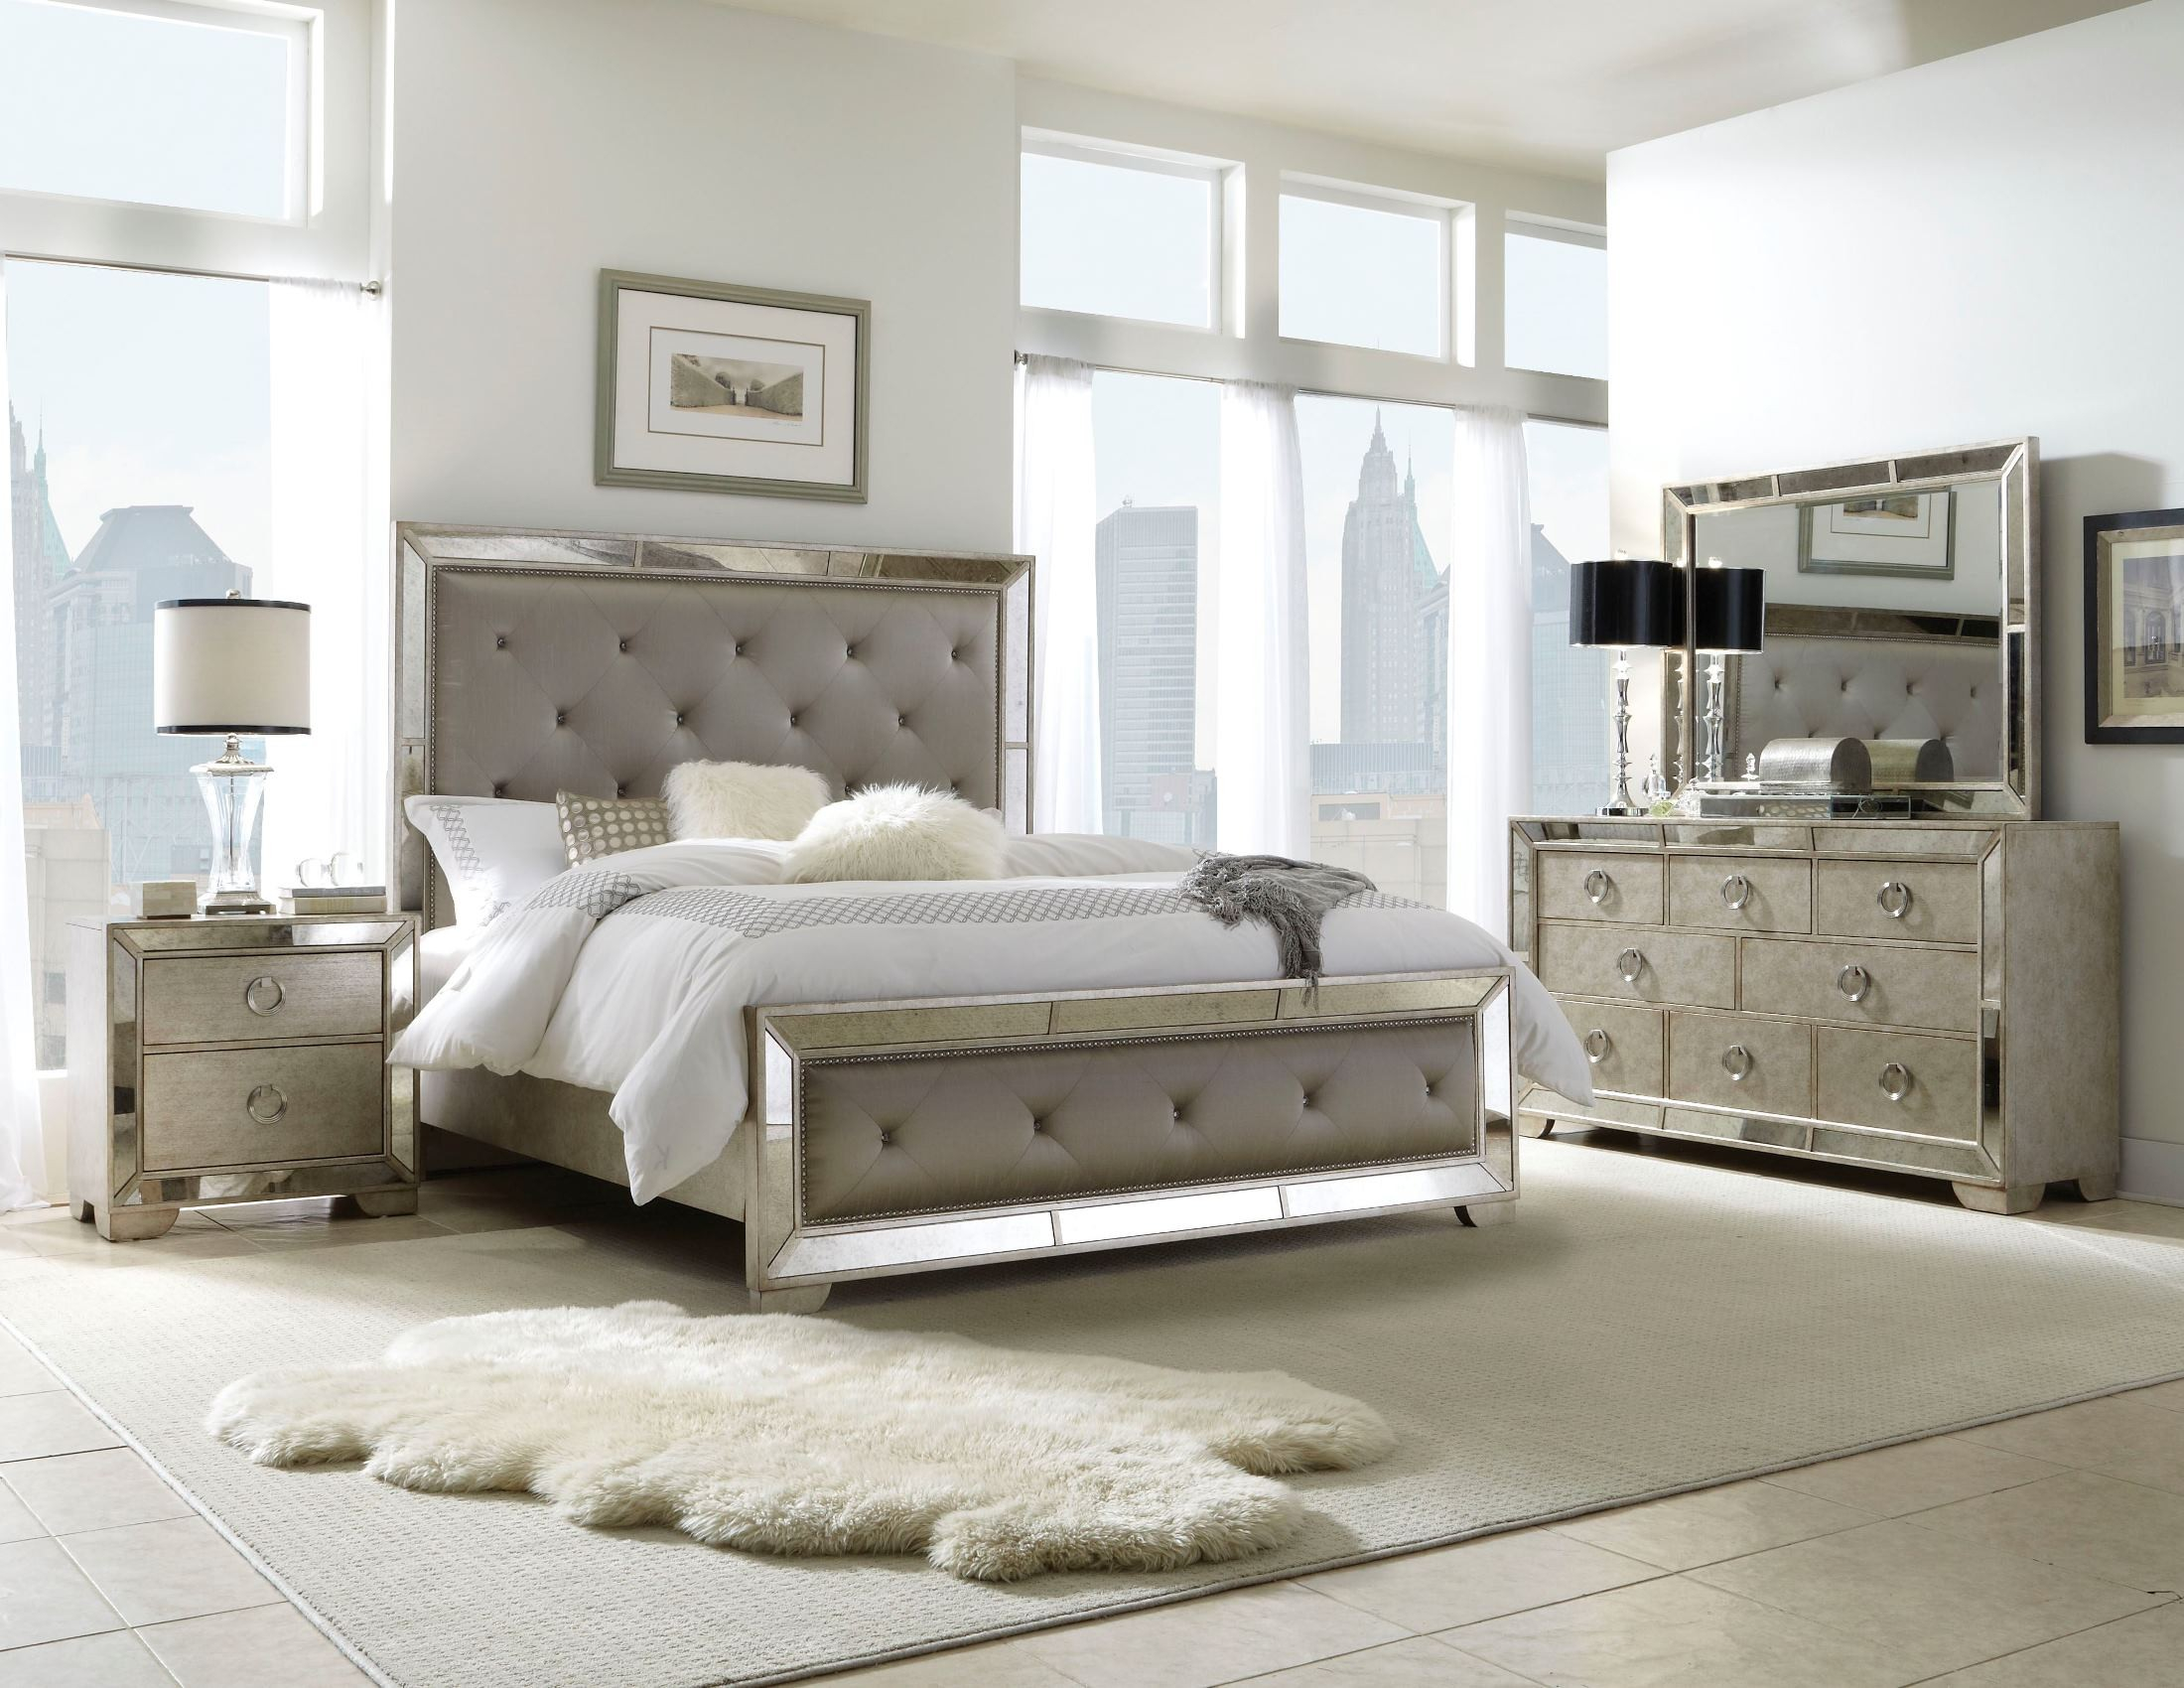 Ailey Platform Bedroom Set intended for proportions 2200 X 1700